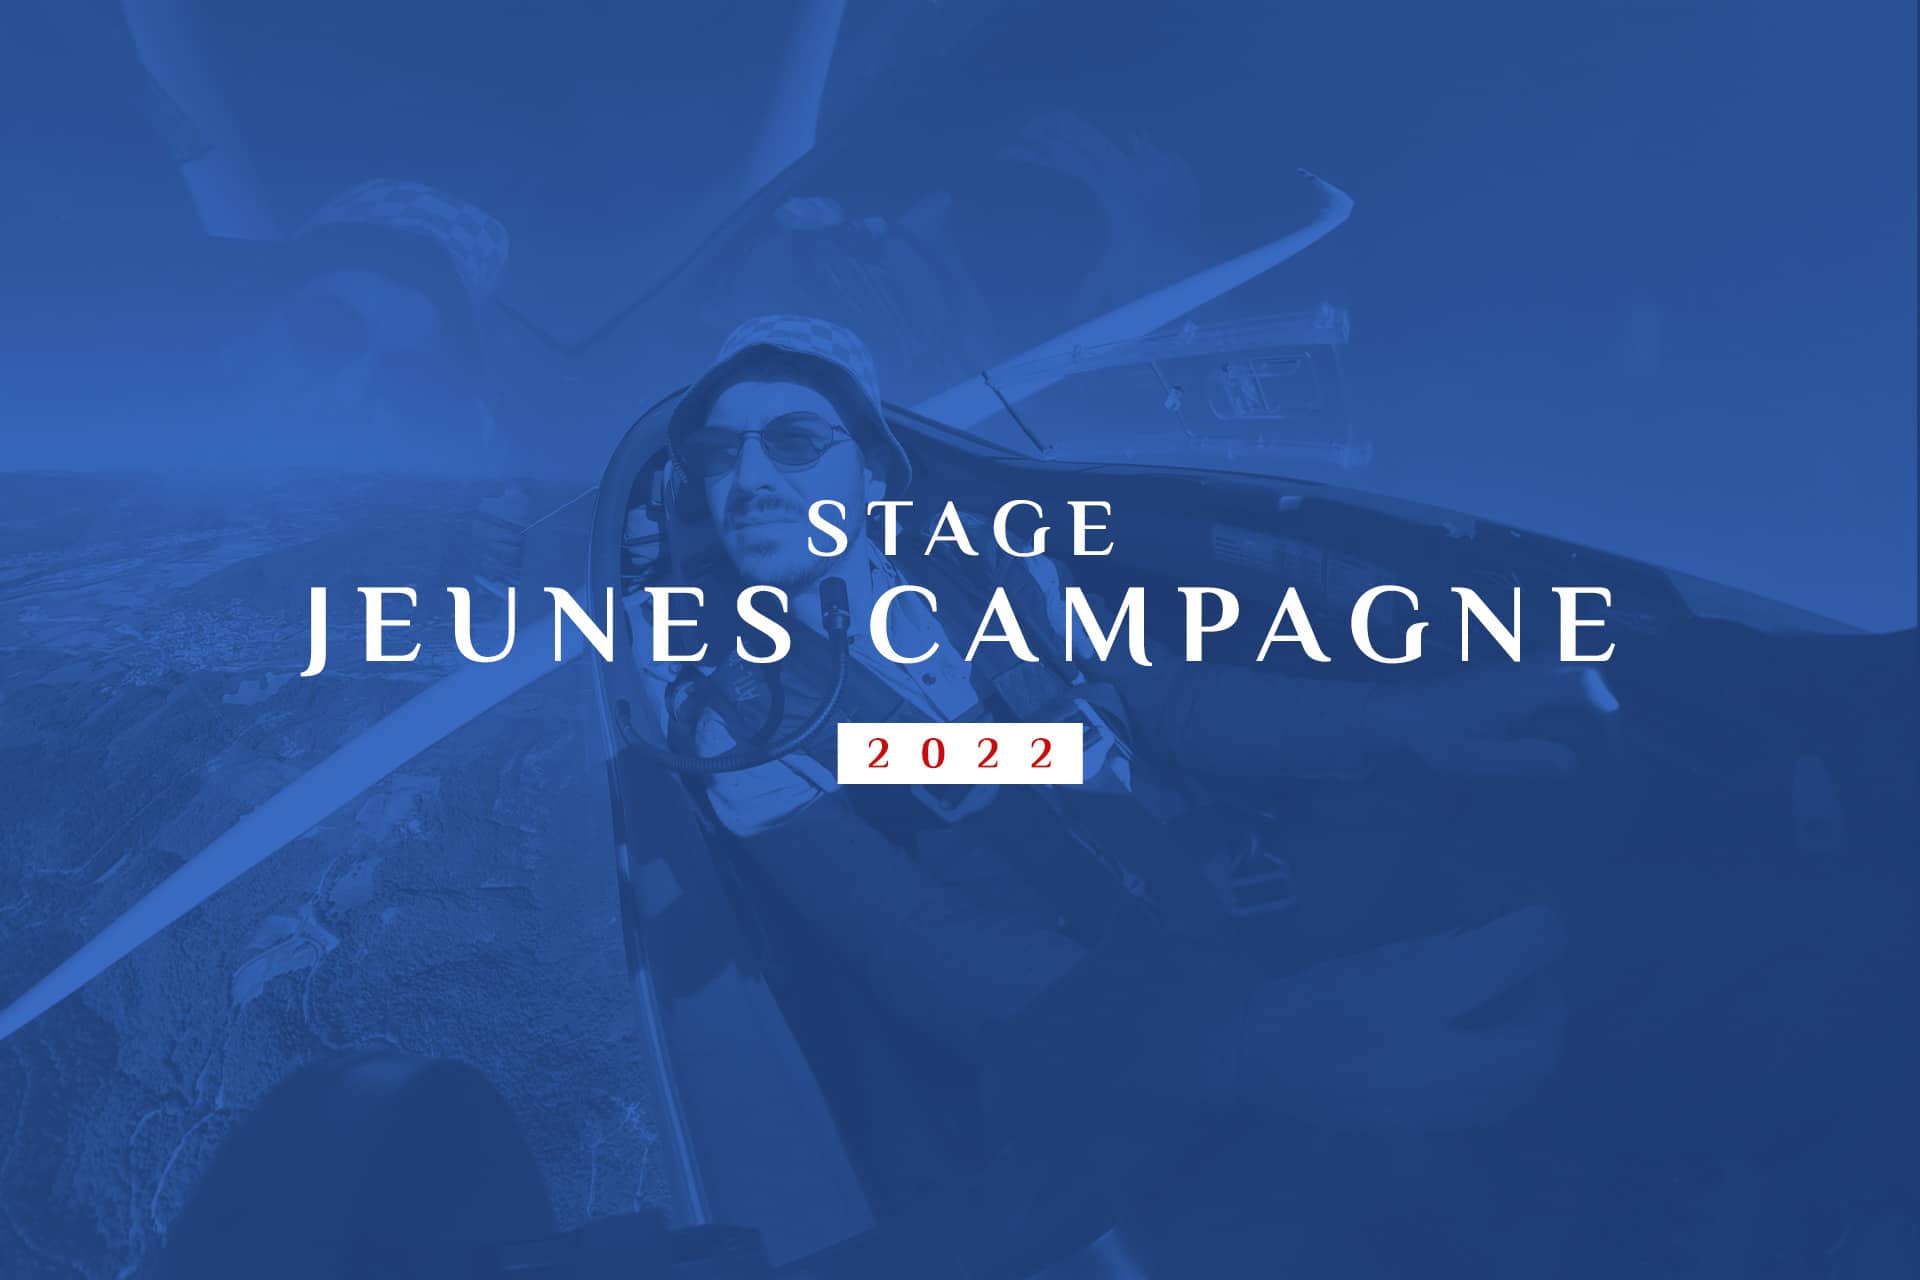 Stage jeunes campagne 2022